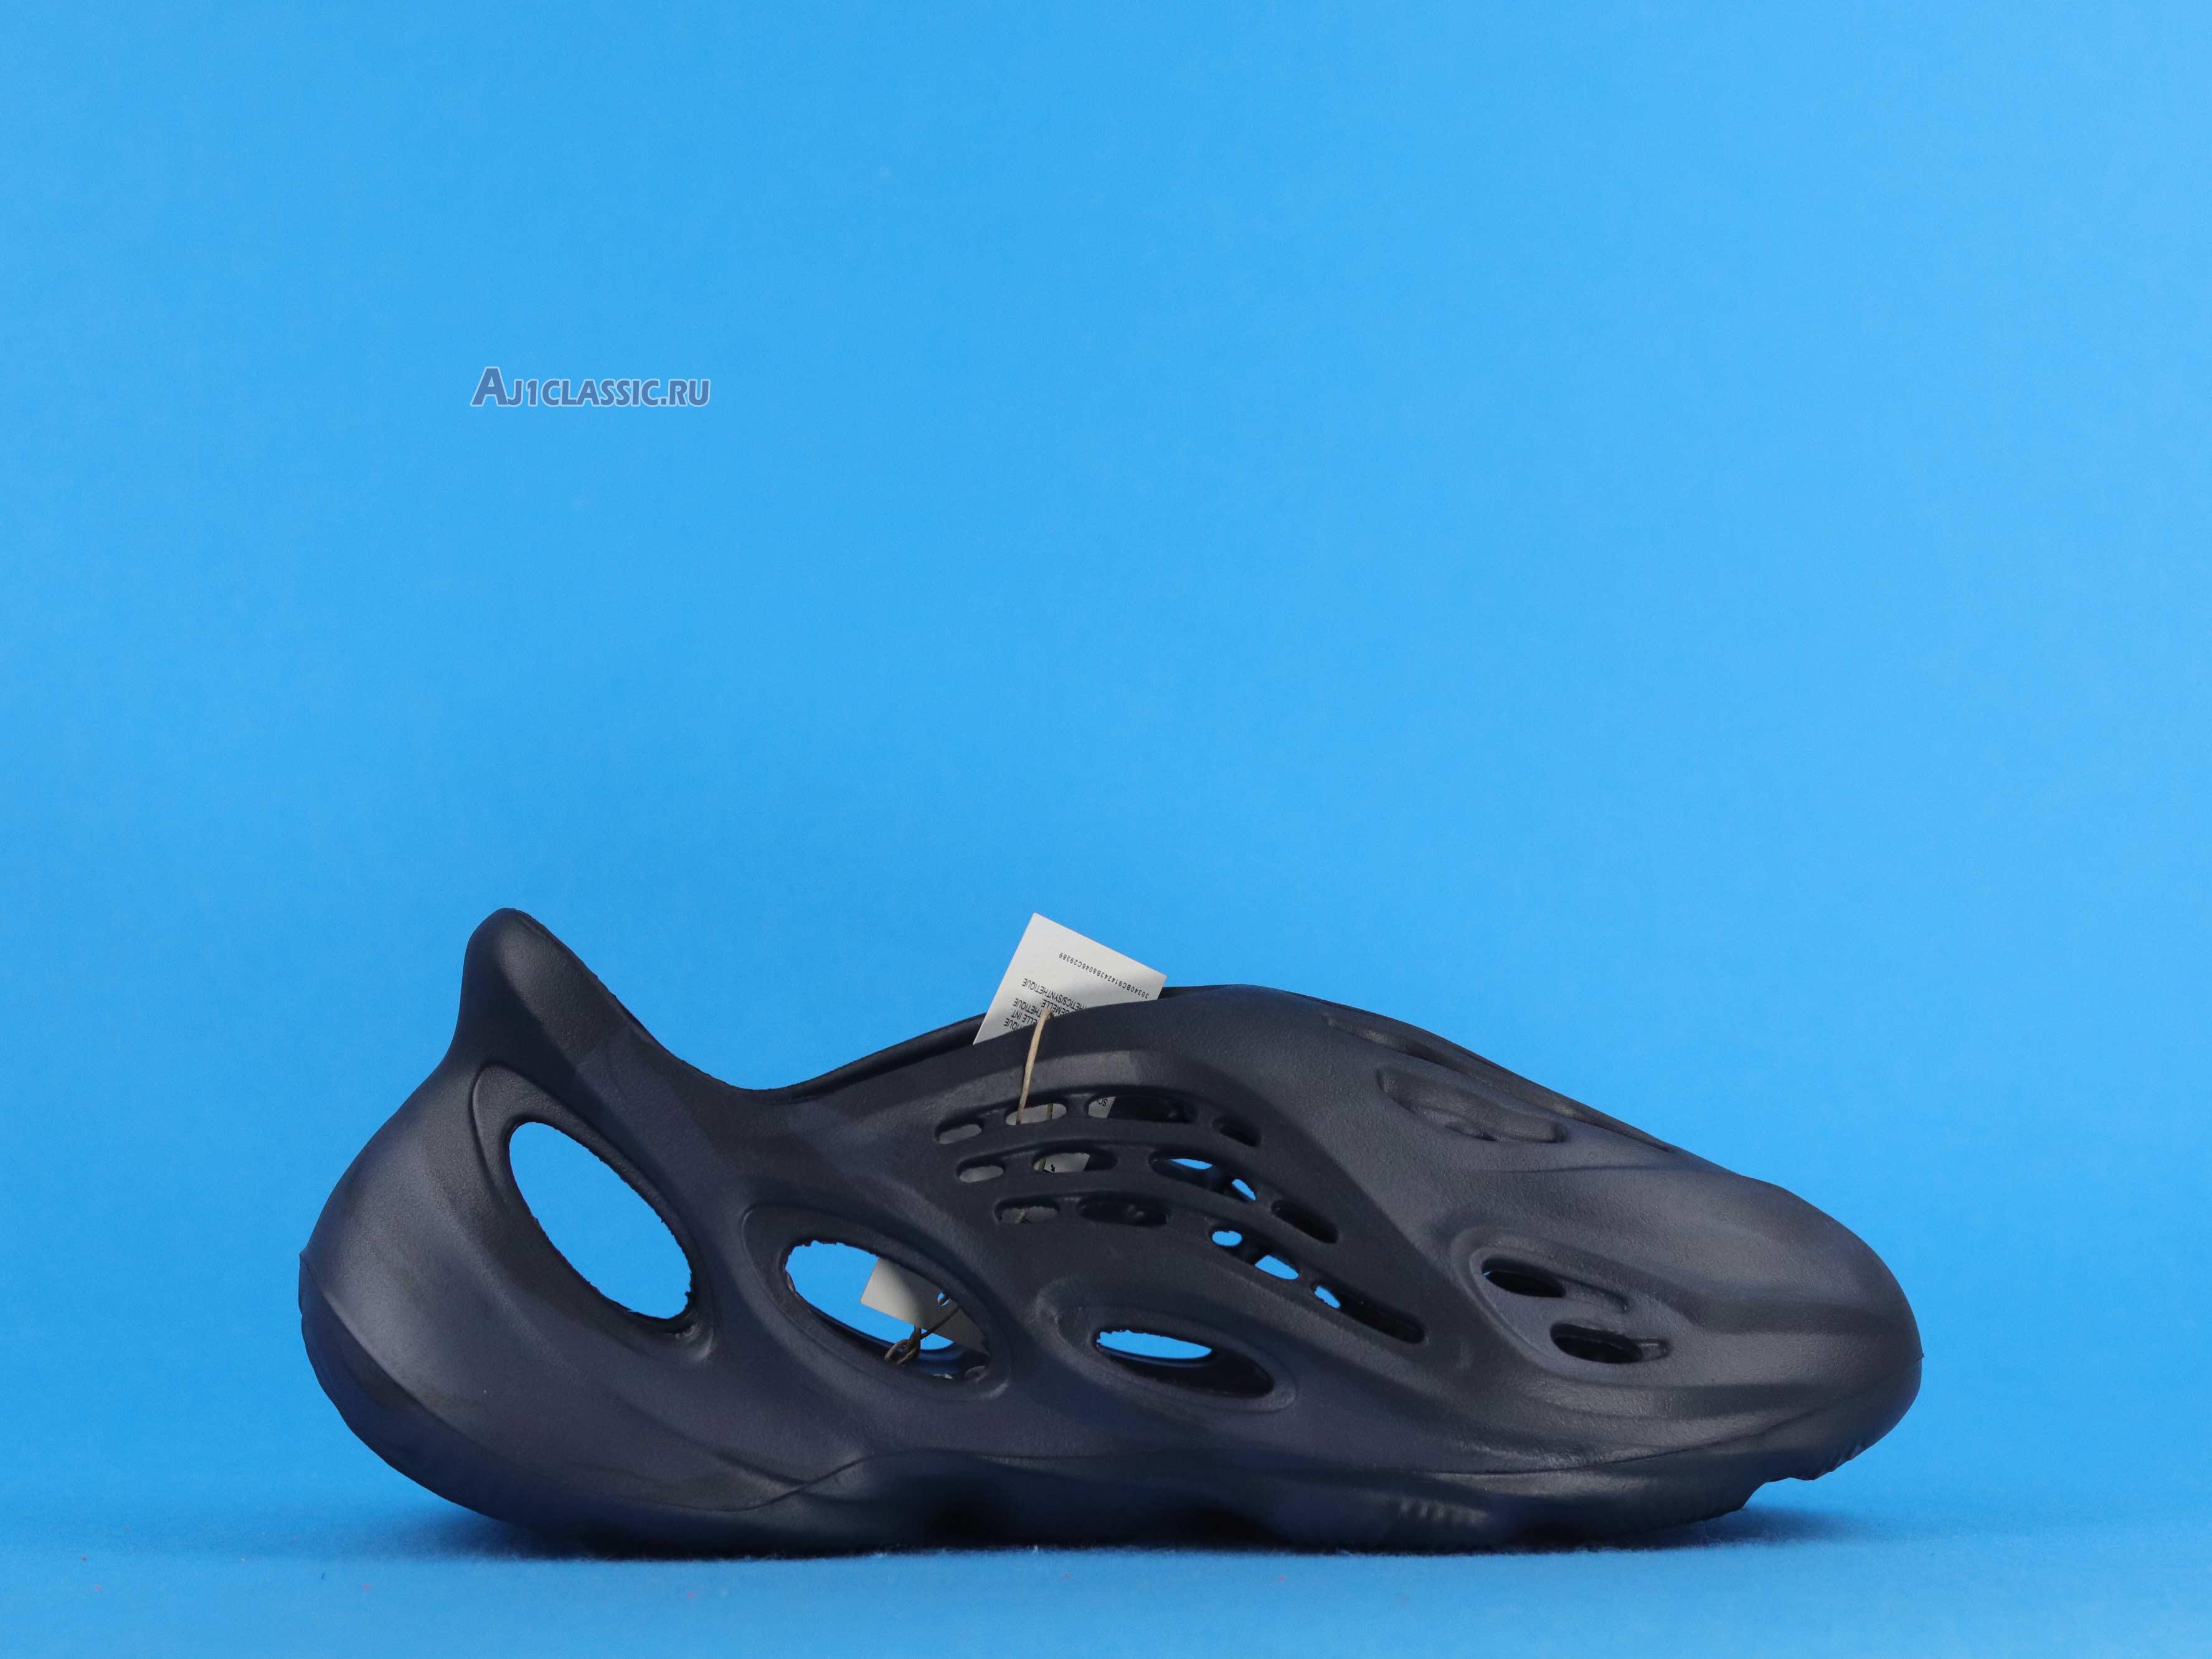 Adidas Yeezy Foam Runner "Mineral Blue" GV7903